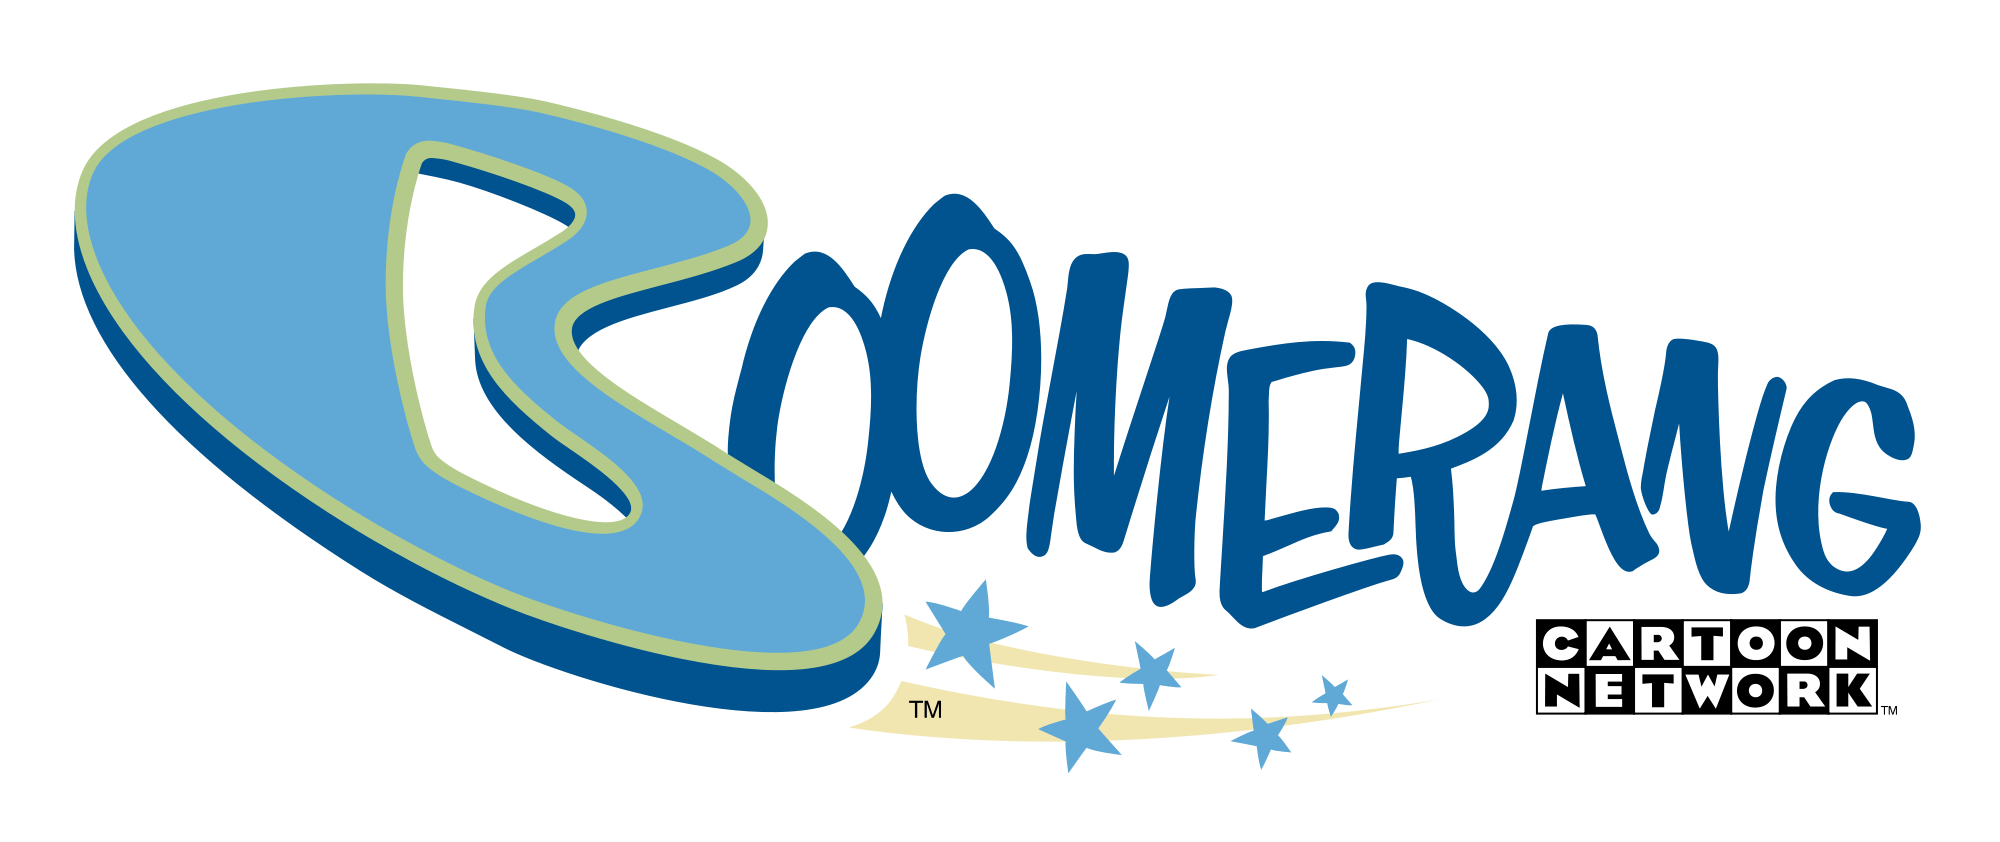 Funny Boomerang Logo - Boomerang | The Cartoon Network Wiki | FANDOM powered by Wikia